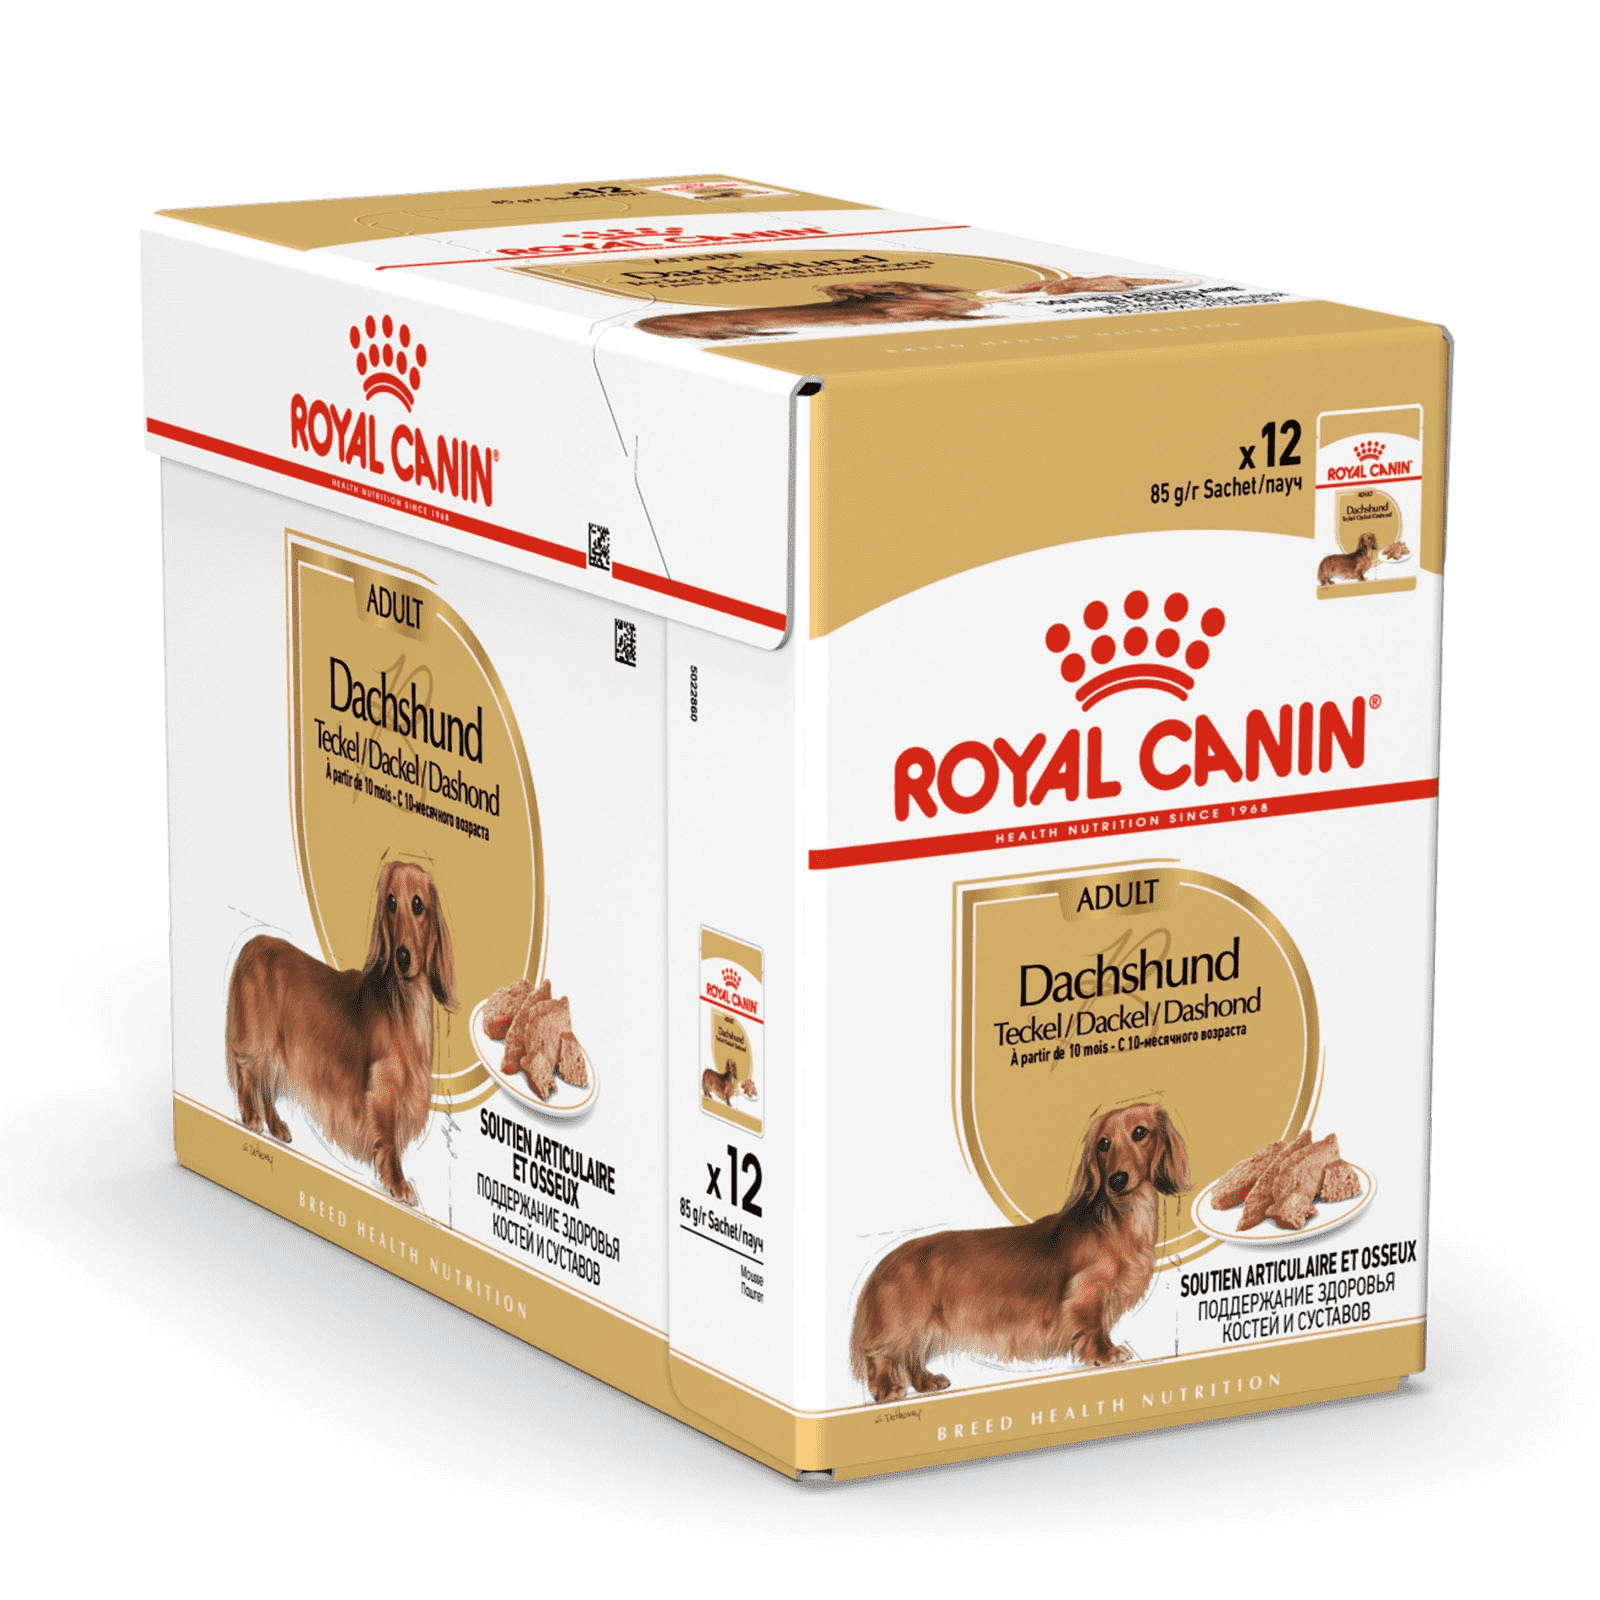 royal canin adult